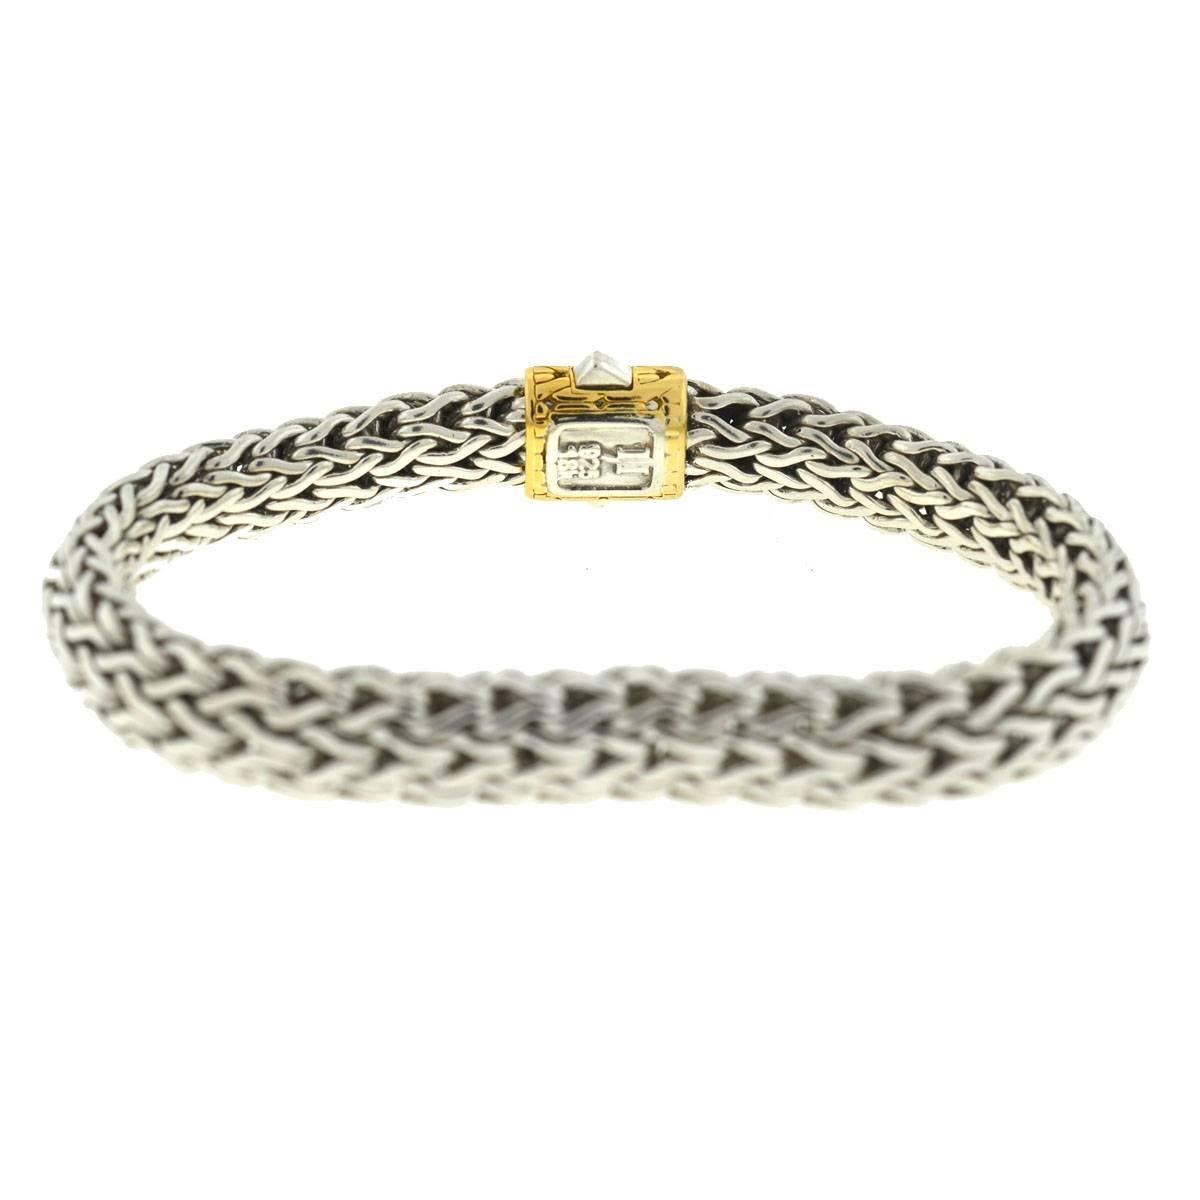 Company - John Hardy
Style - Men's Woven Bracelet
Metal - Sterling Silver / 18k Gold
Length - 8.5